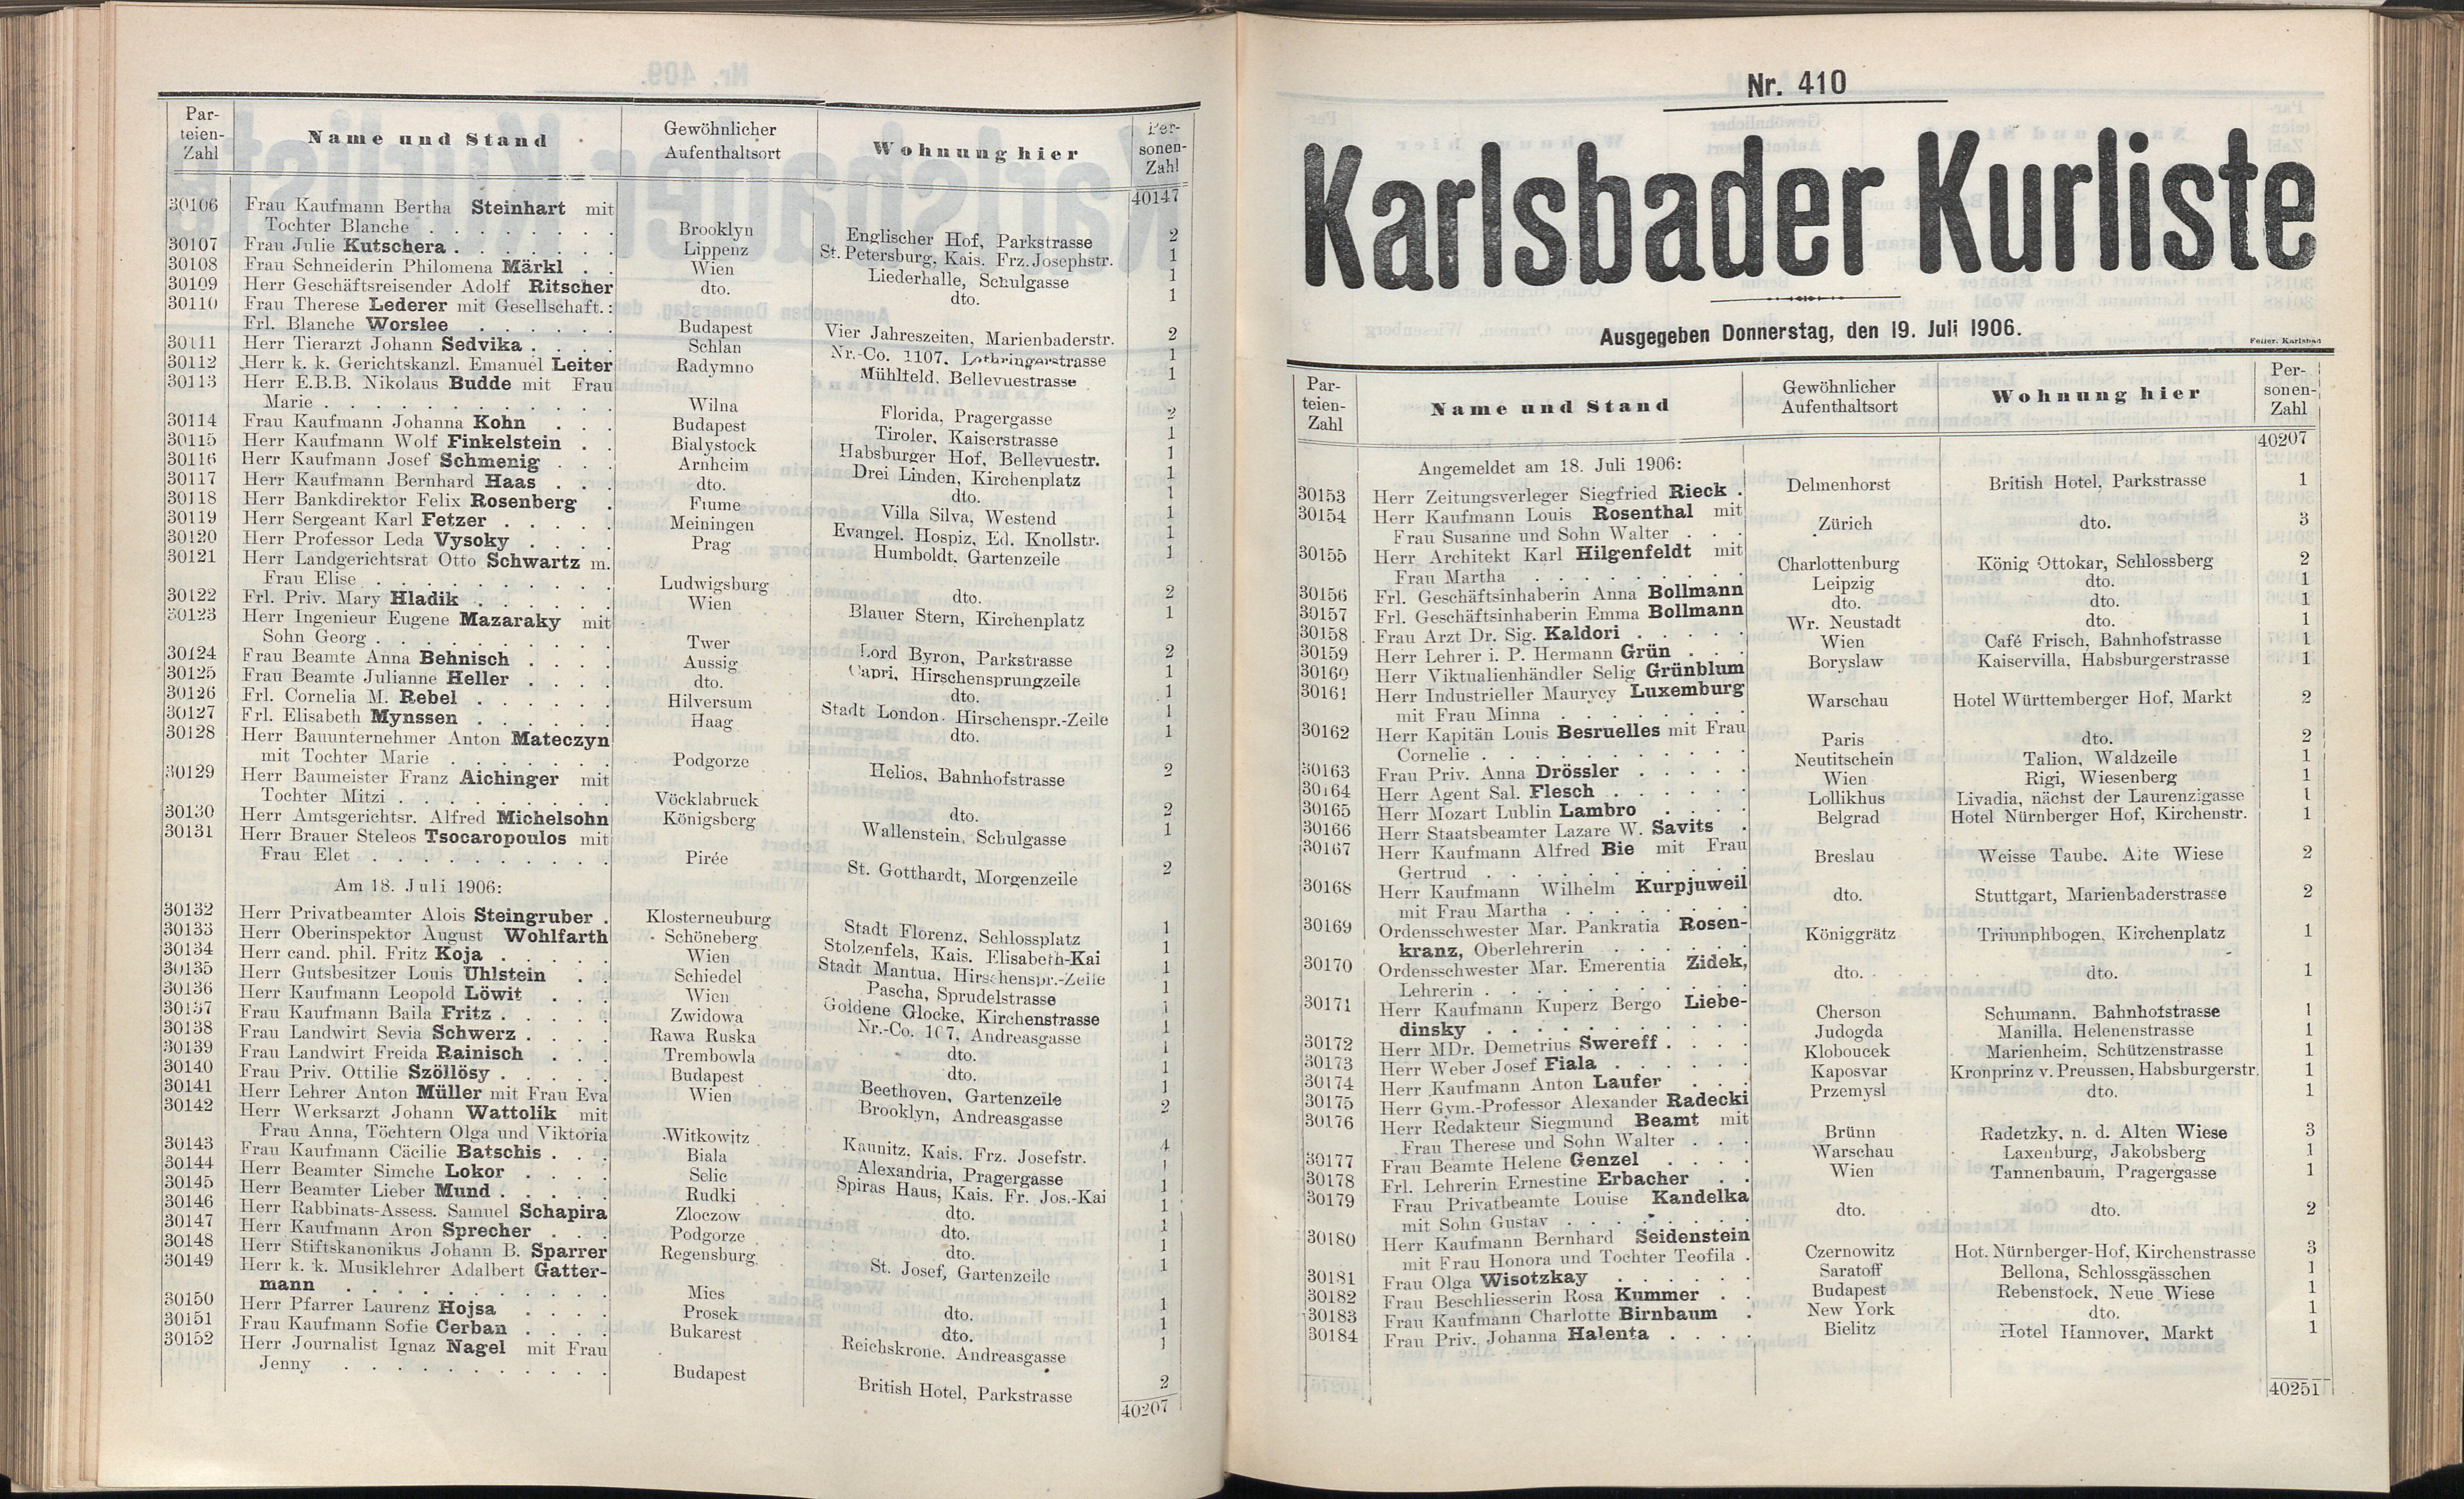 525. soap-kv_knihovna_karlsbader-kurliste-1906_5260